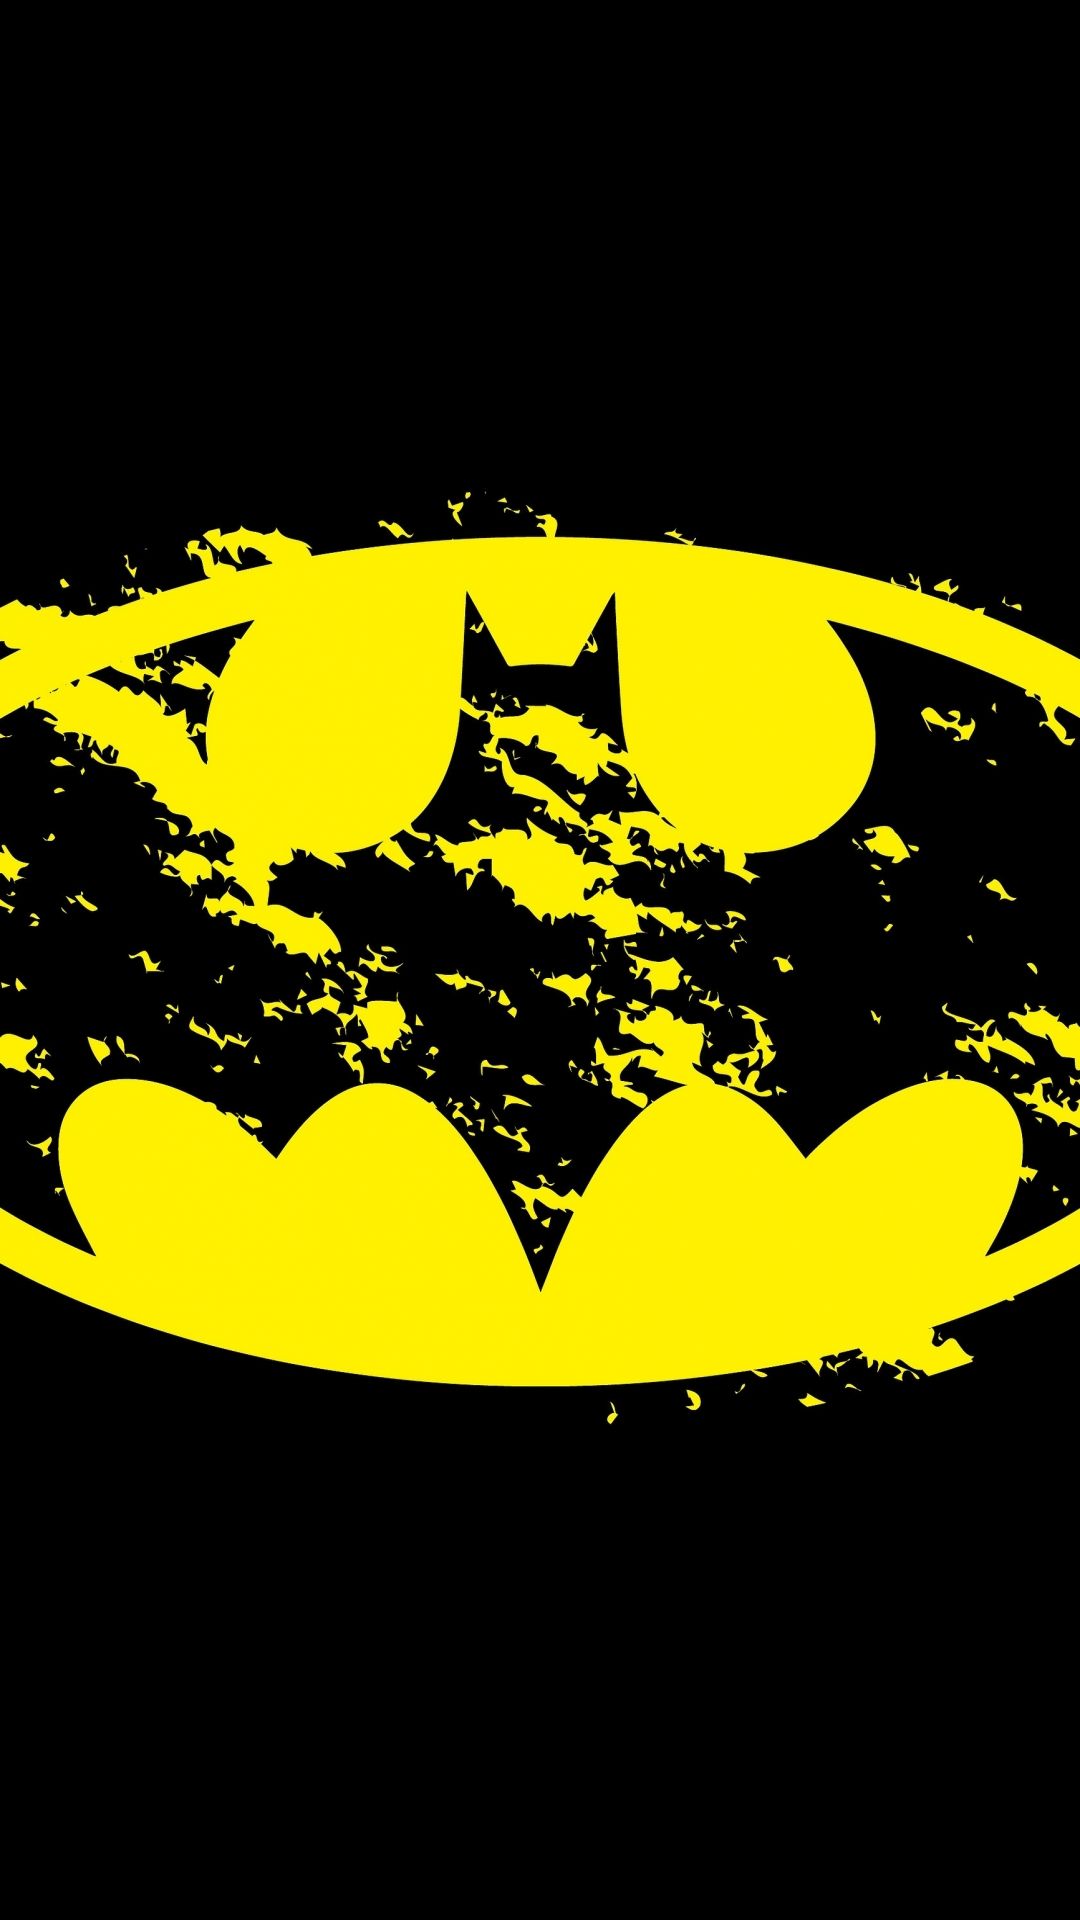 Batman Logo iPhone Wallpaper. Batman wallpaper iphone, Superman